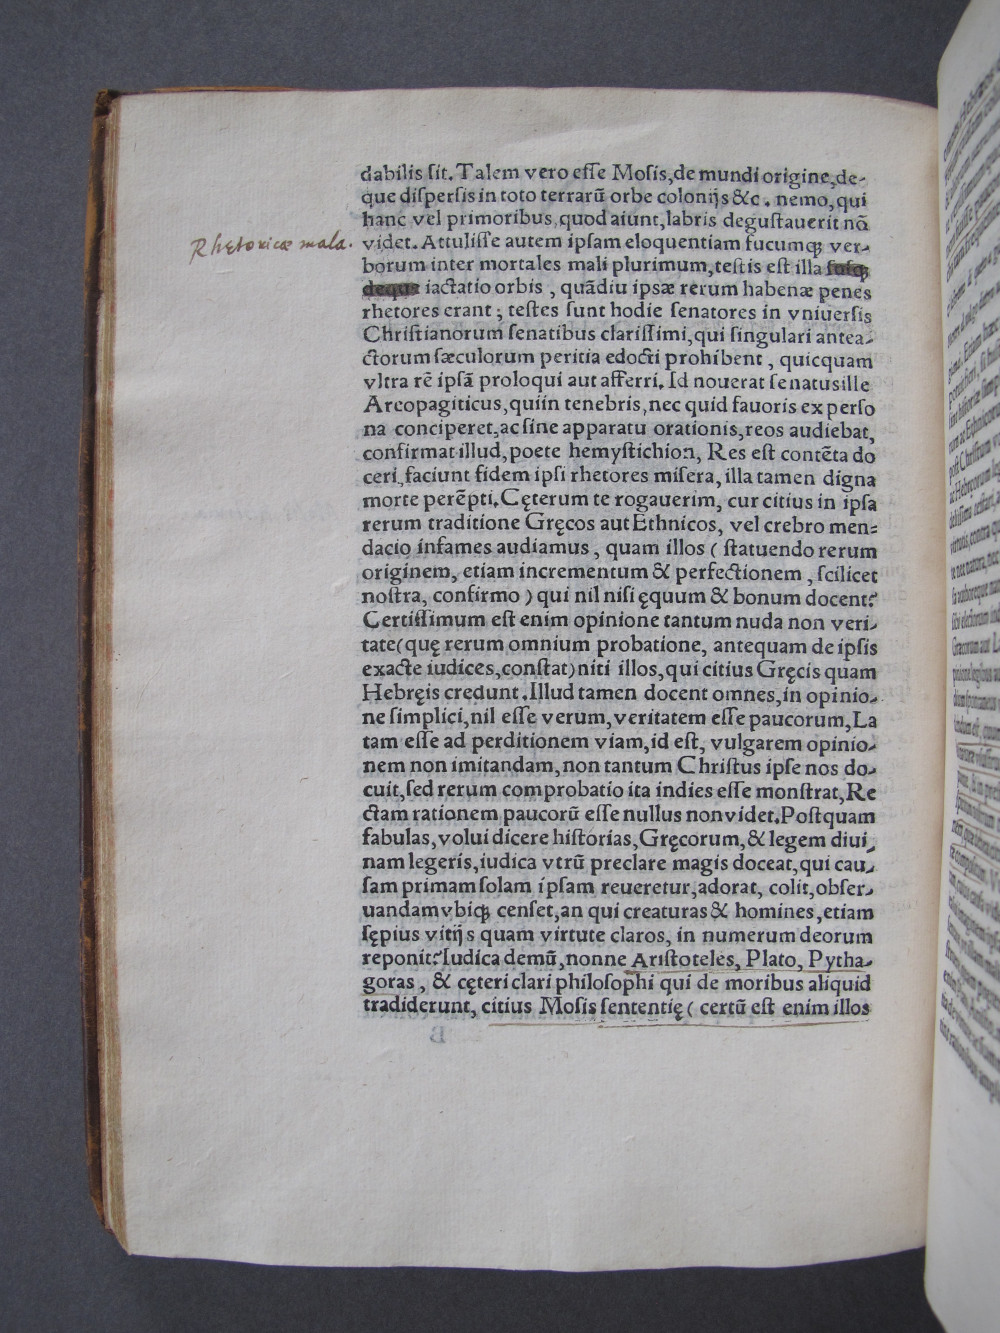 Folio B1 verso